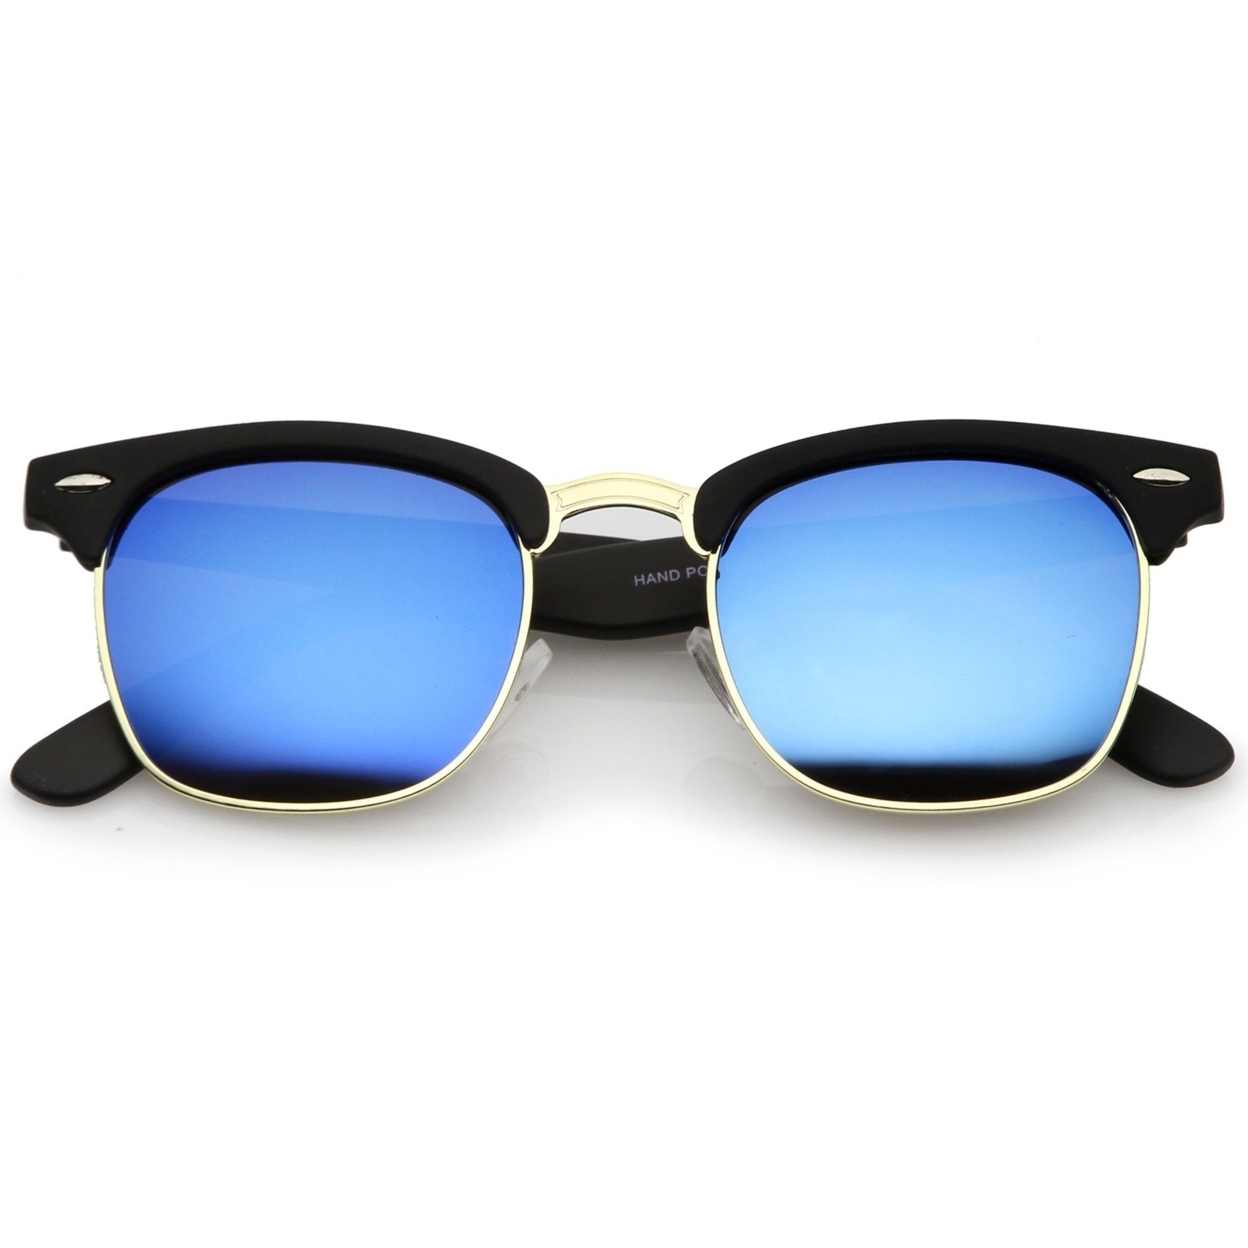 Rubberized Mirror Polarized Lens Half Frame Sunglasses 49mm - Rubberized Black-Gold / Pink Mirror